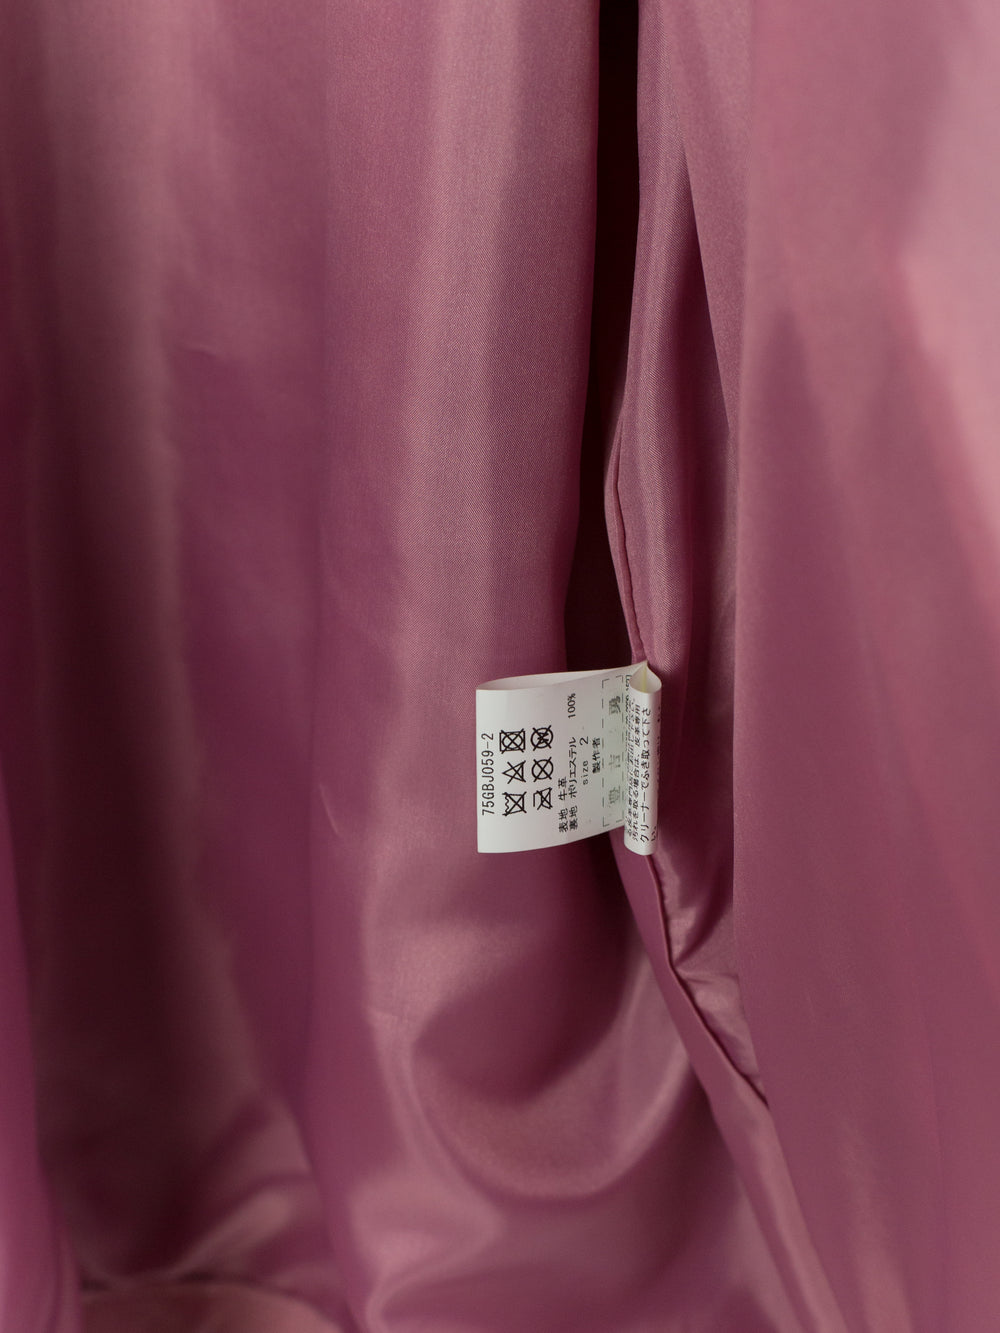 Blackmeans Pink Leather Layered Pocket Coat